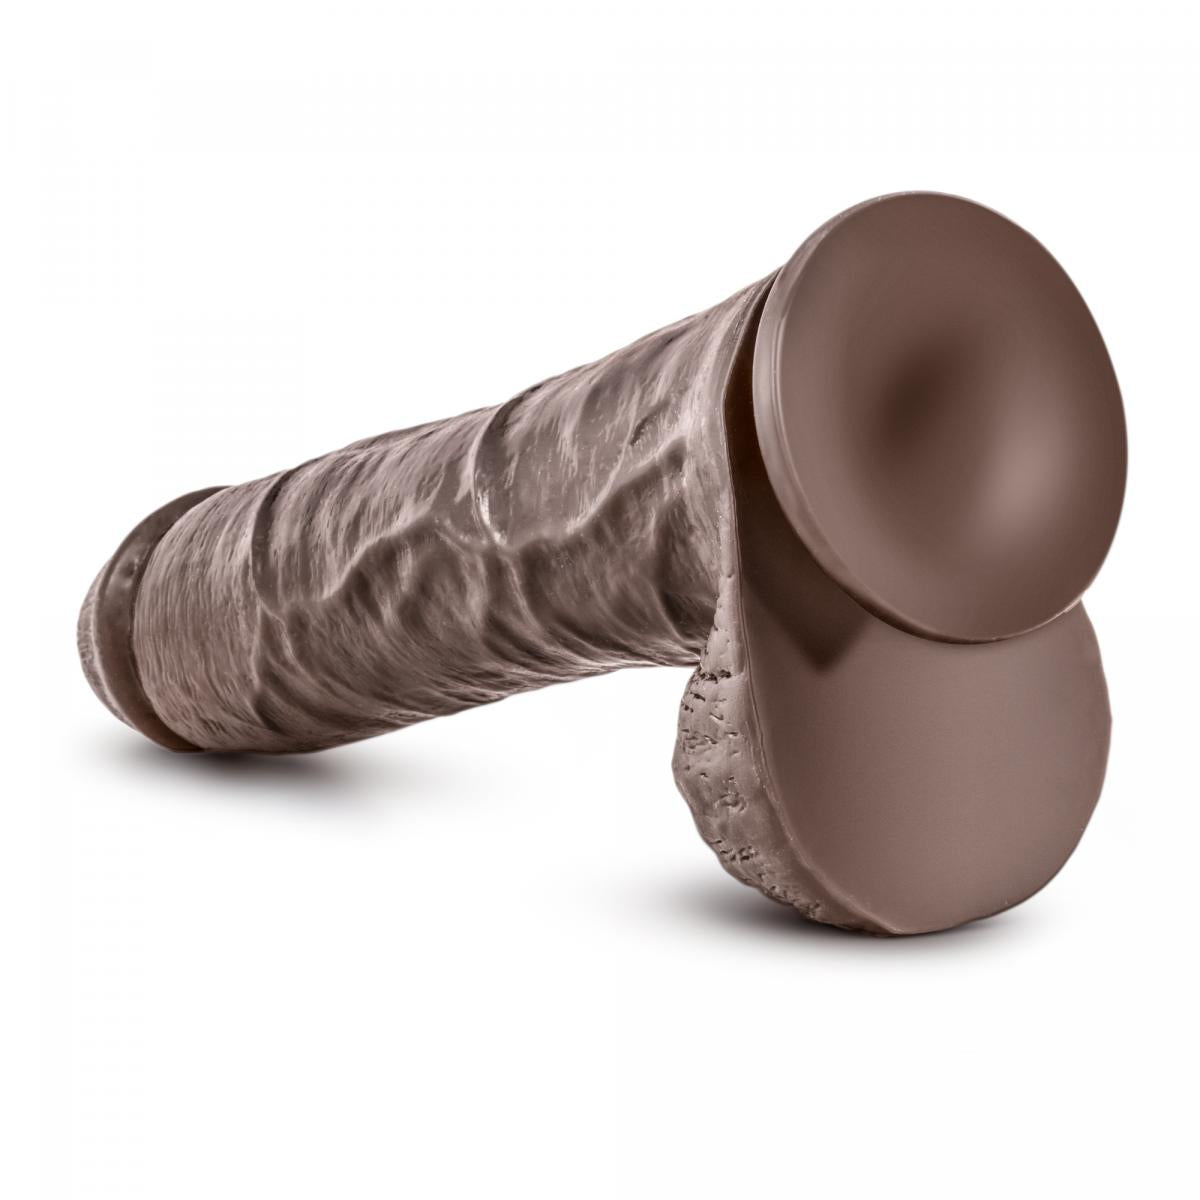 Dr. Skin - Mr. Savage Dildo Met Zuignap 29 cm - Chocolate